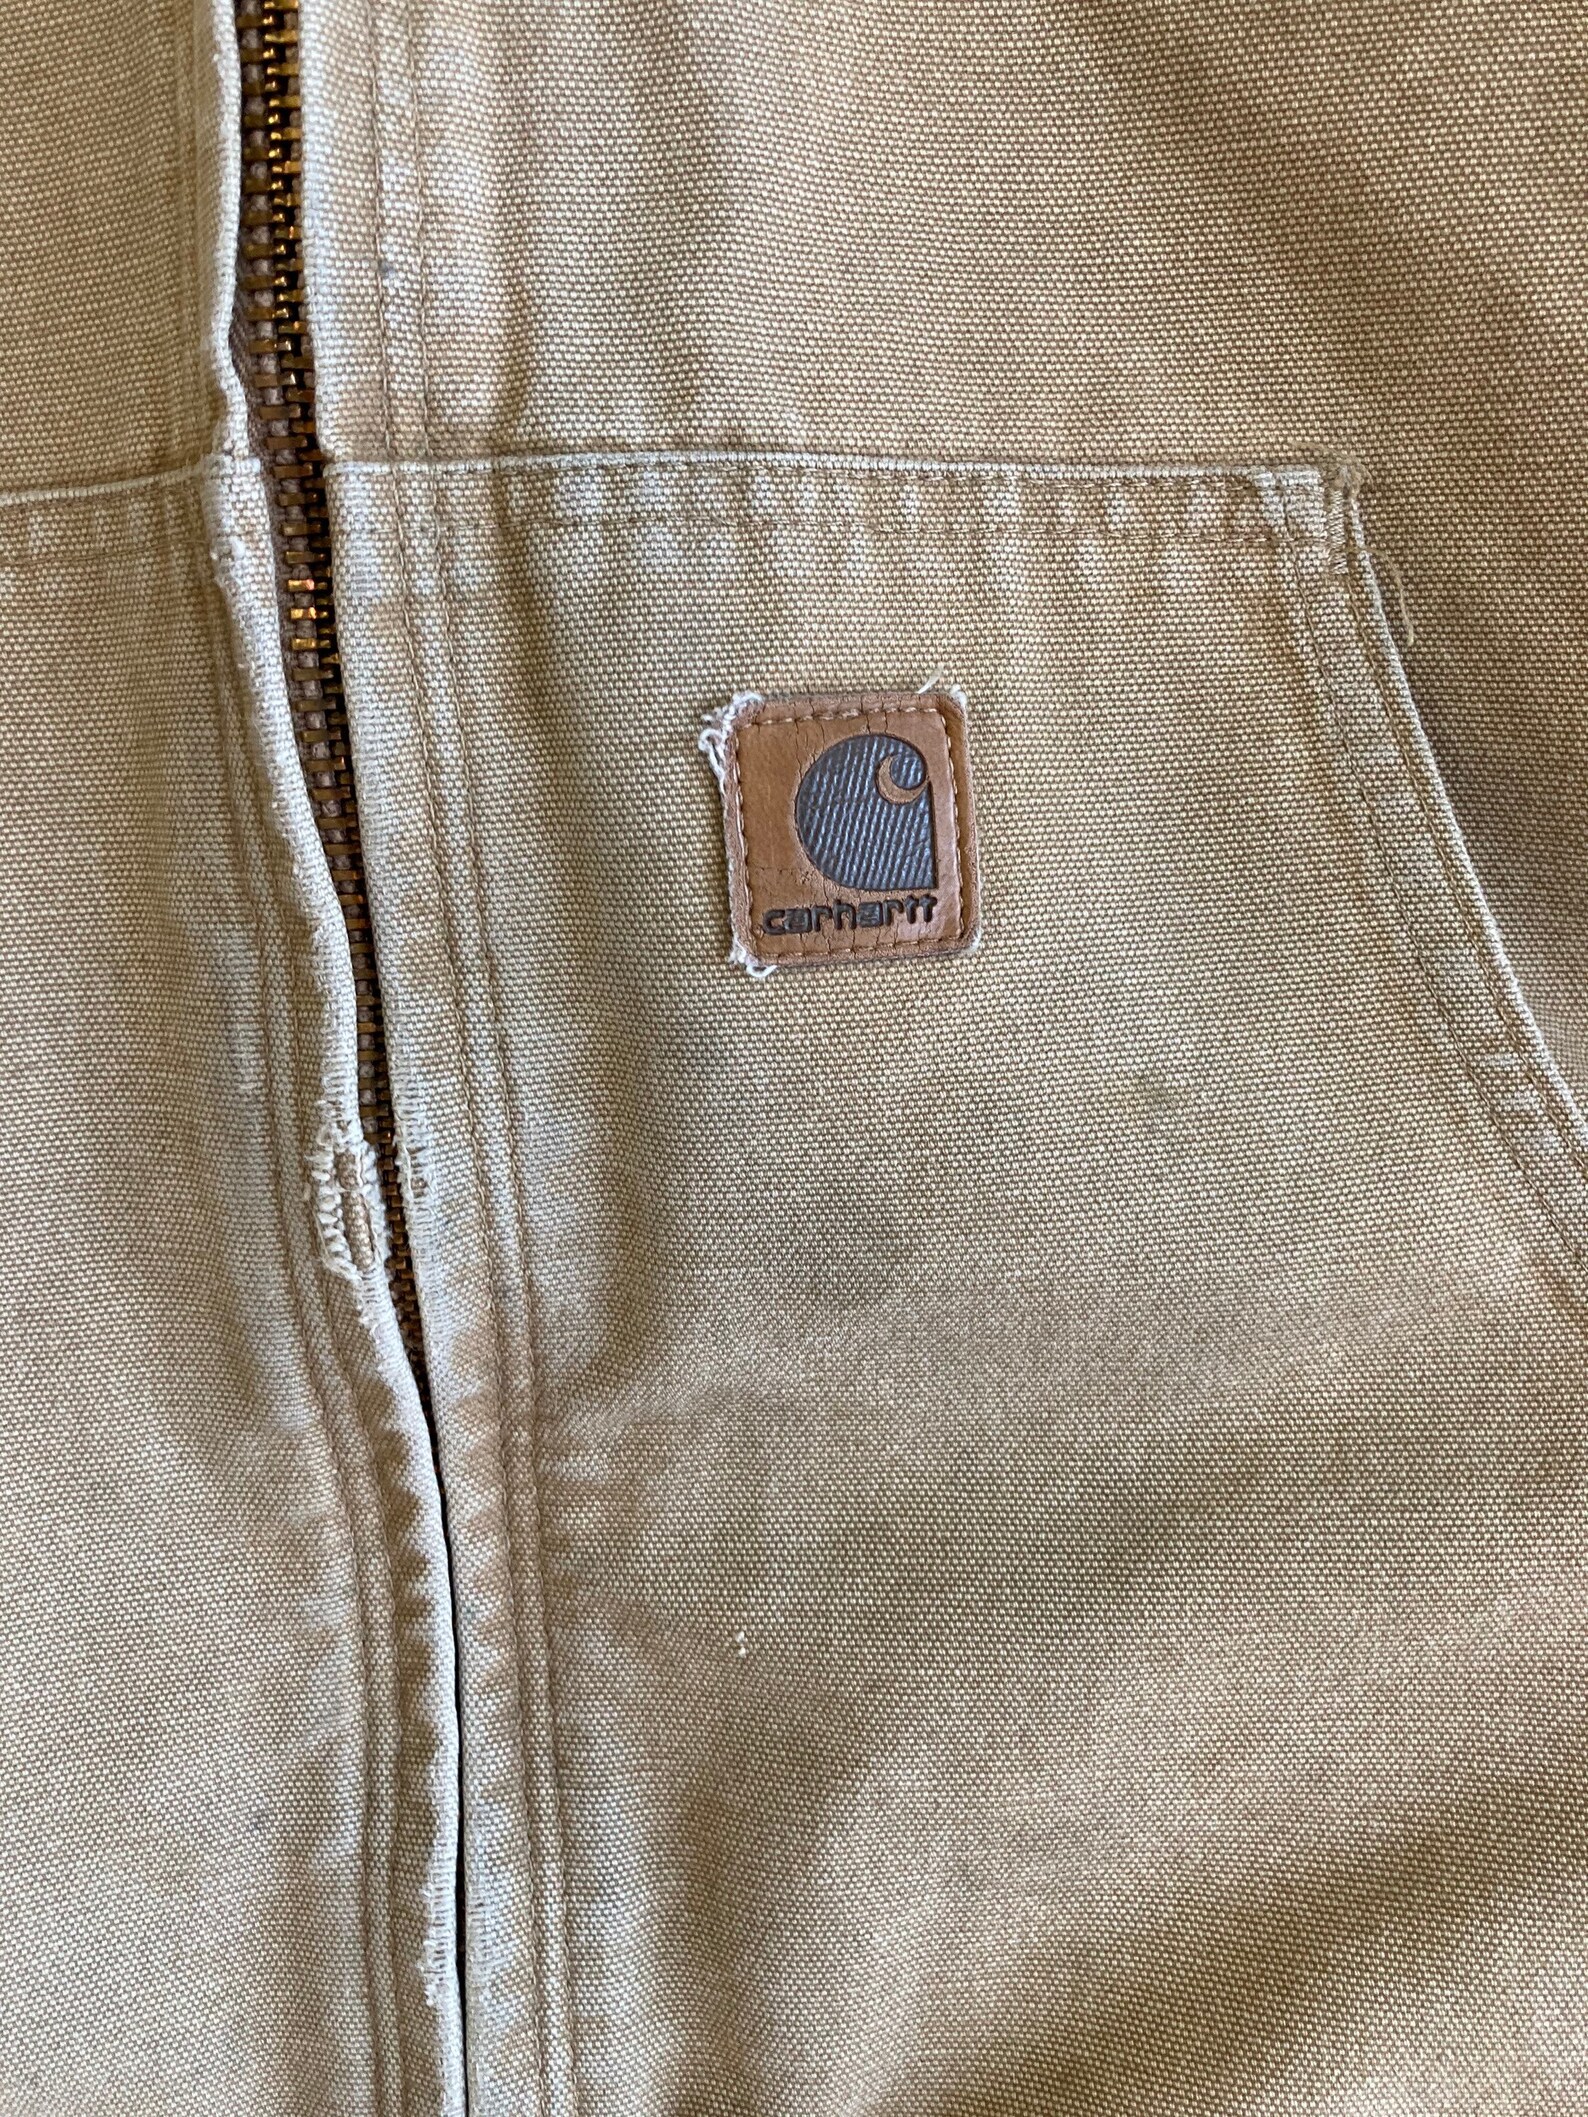 Vintage Carhartt Jacket | Etsy